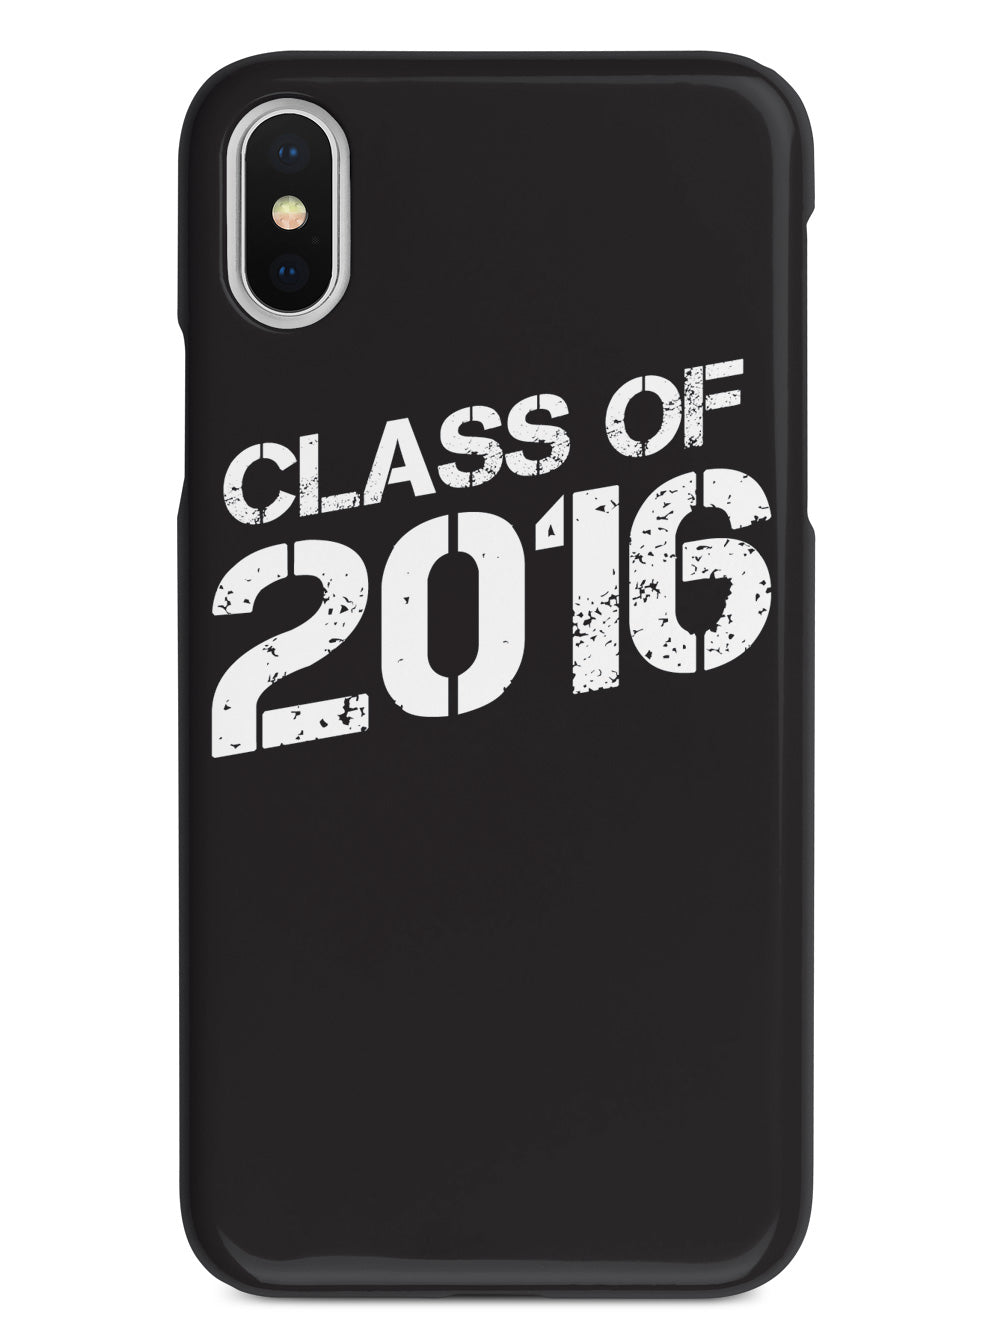 Class of 2016 Case